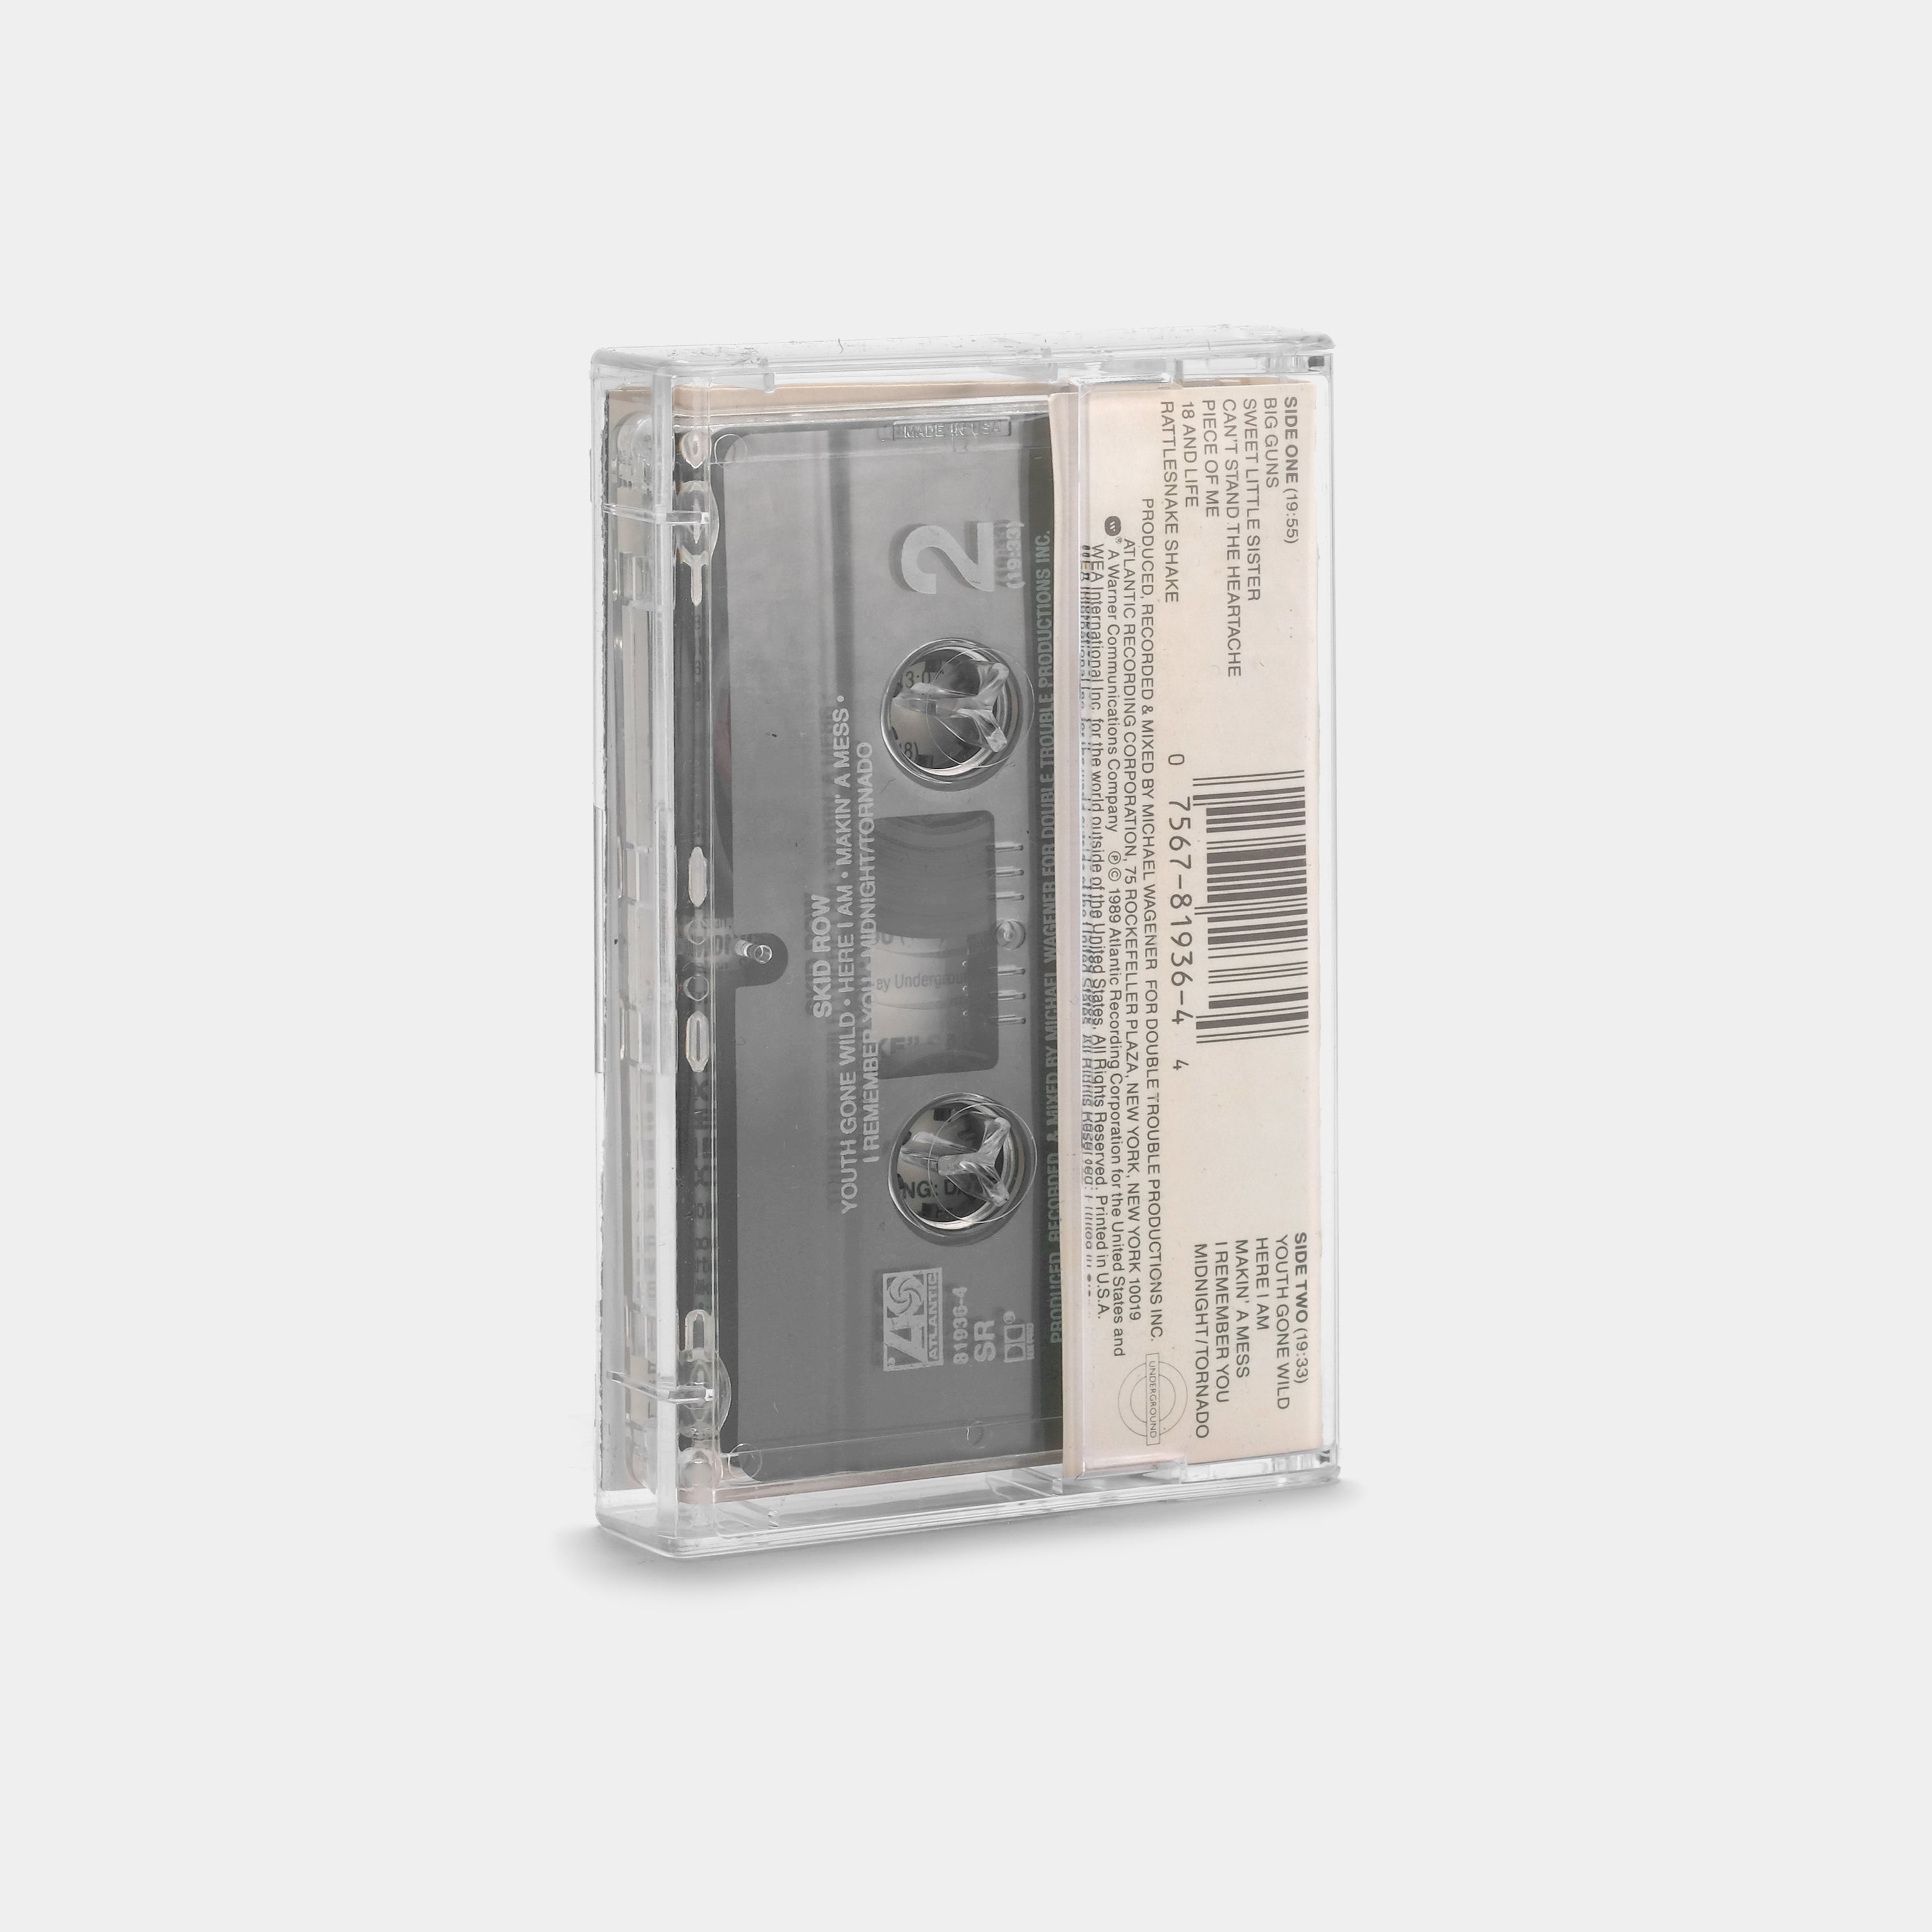 Skid Row - Skid Row Cassette Tape